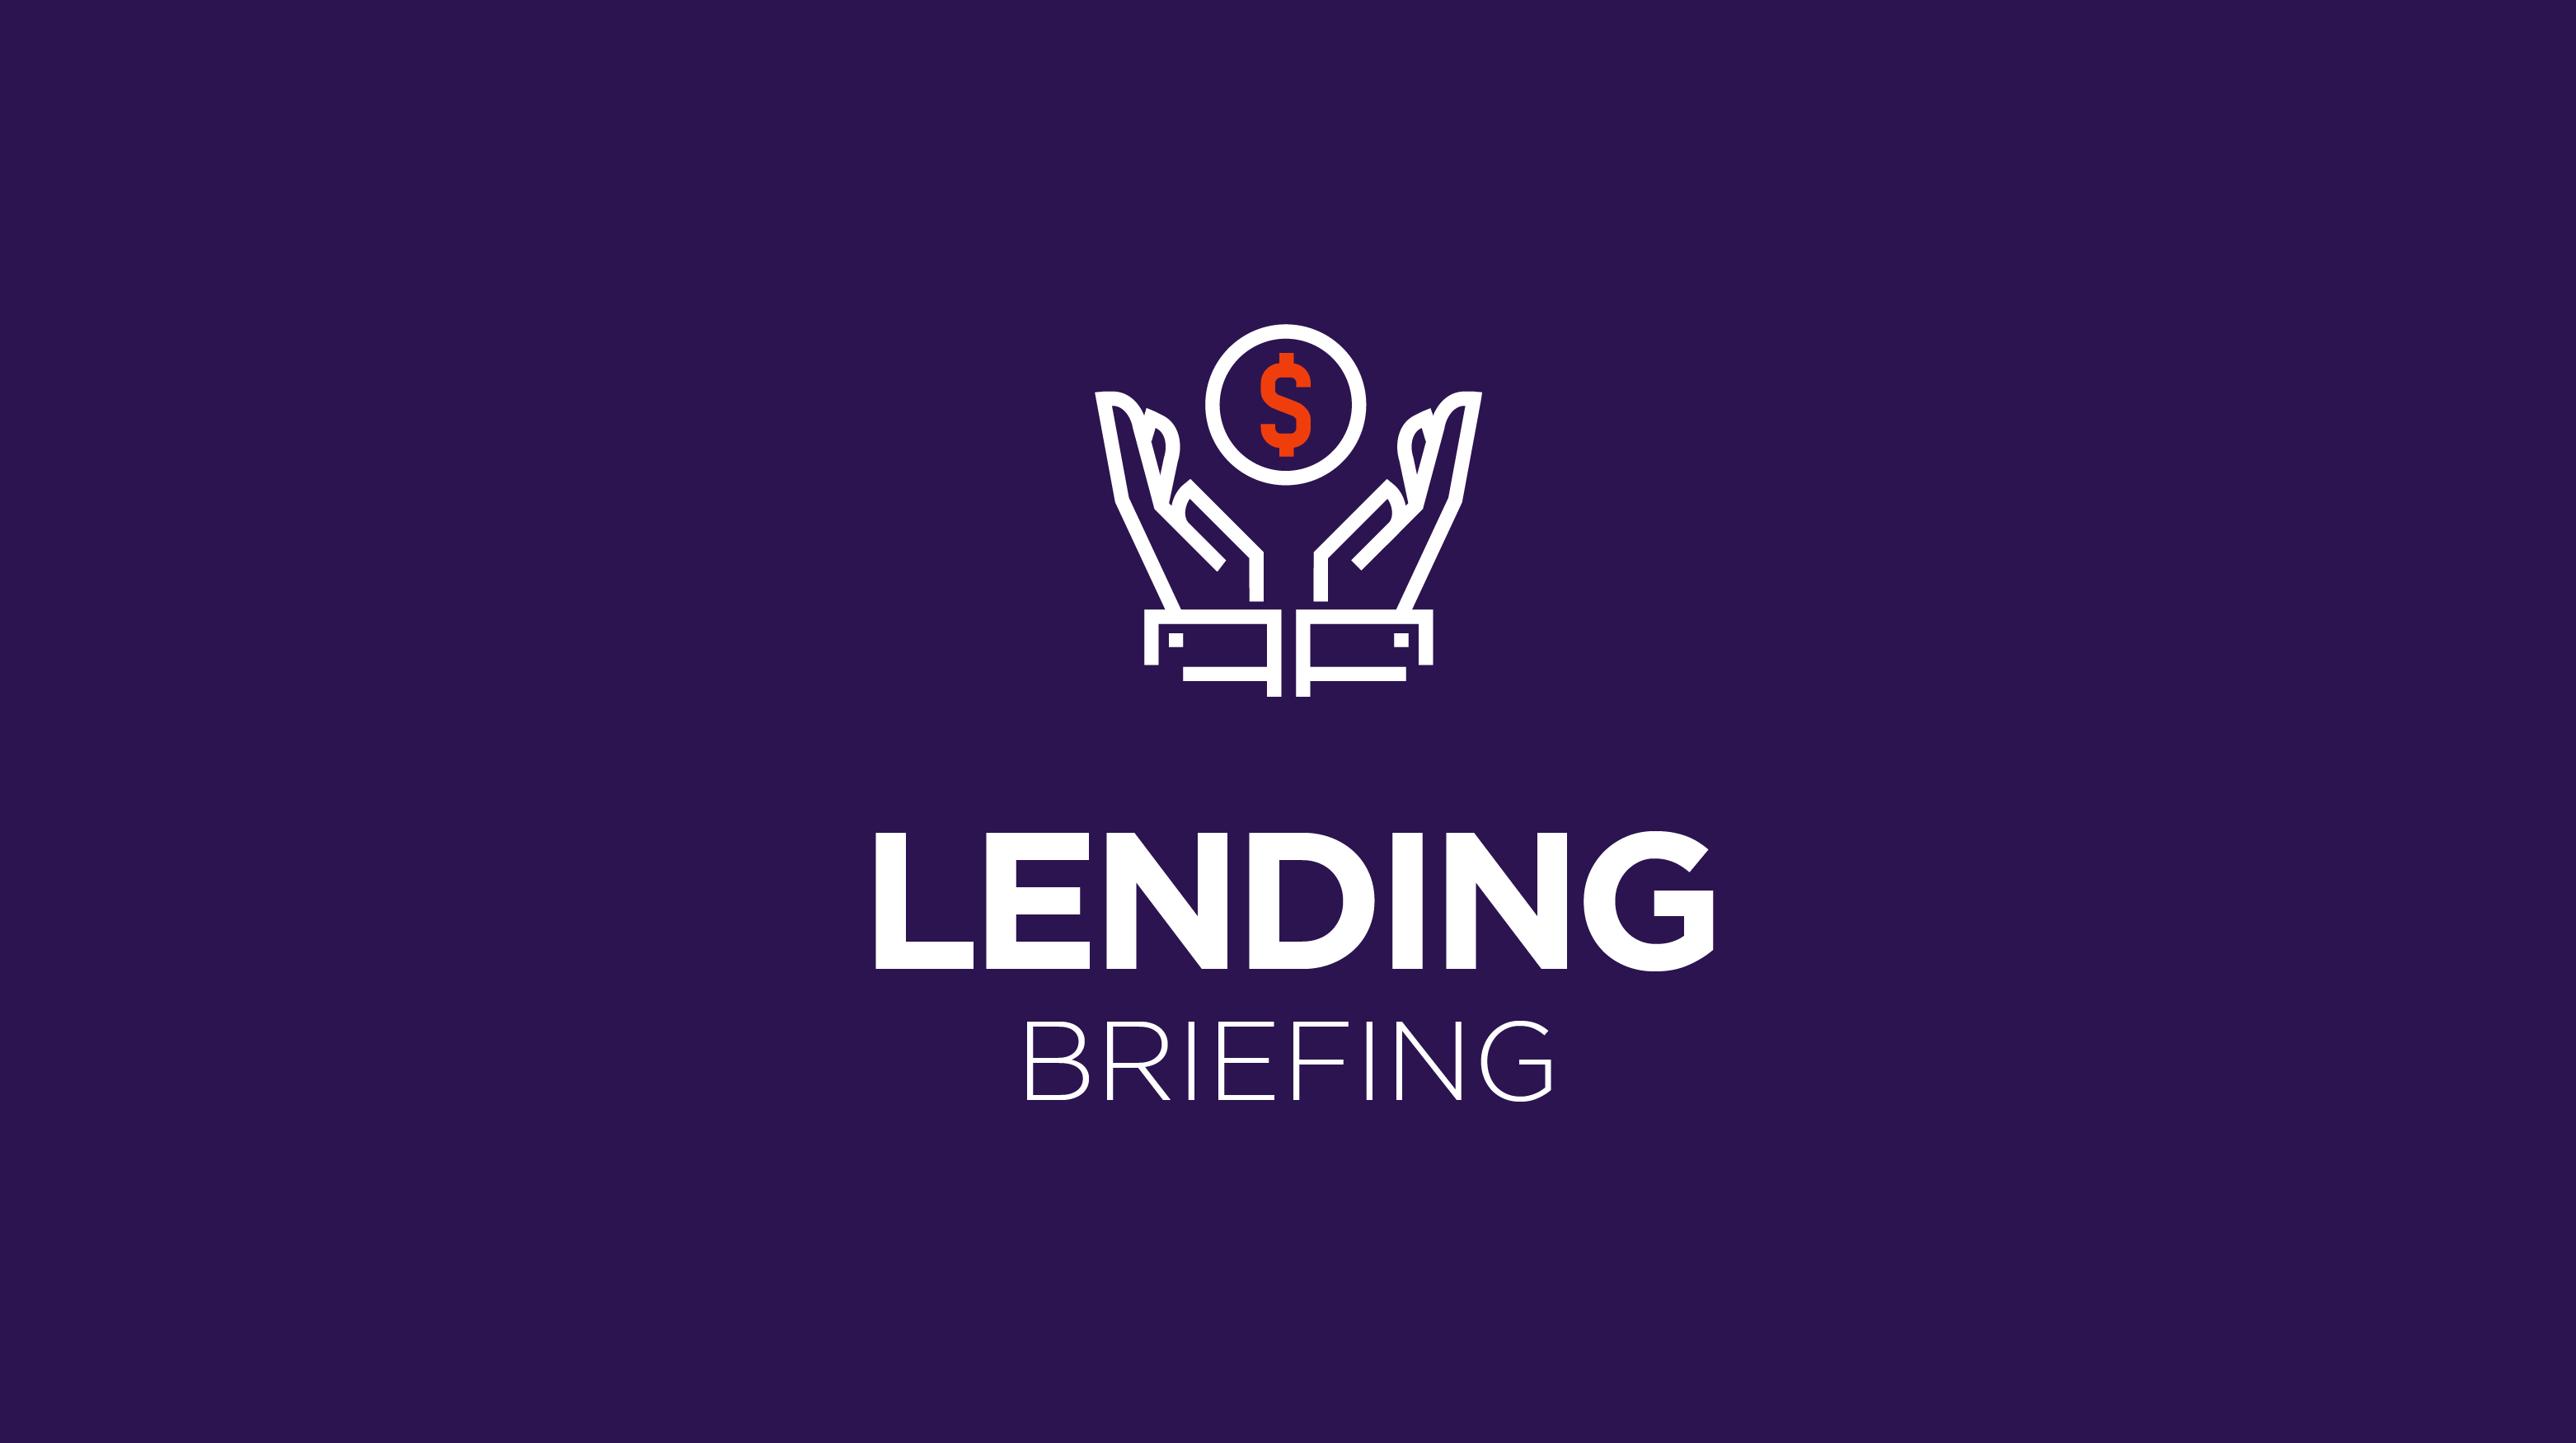 Lending Briefing: Commercial digital lending — a lifeline for mid-sized banks?